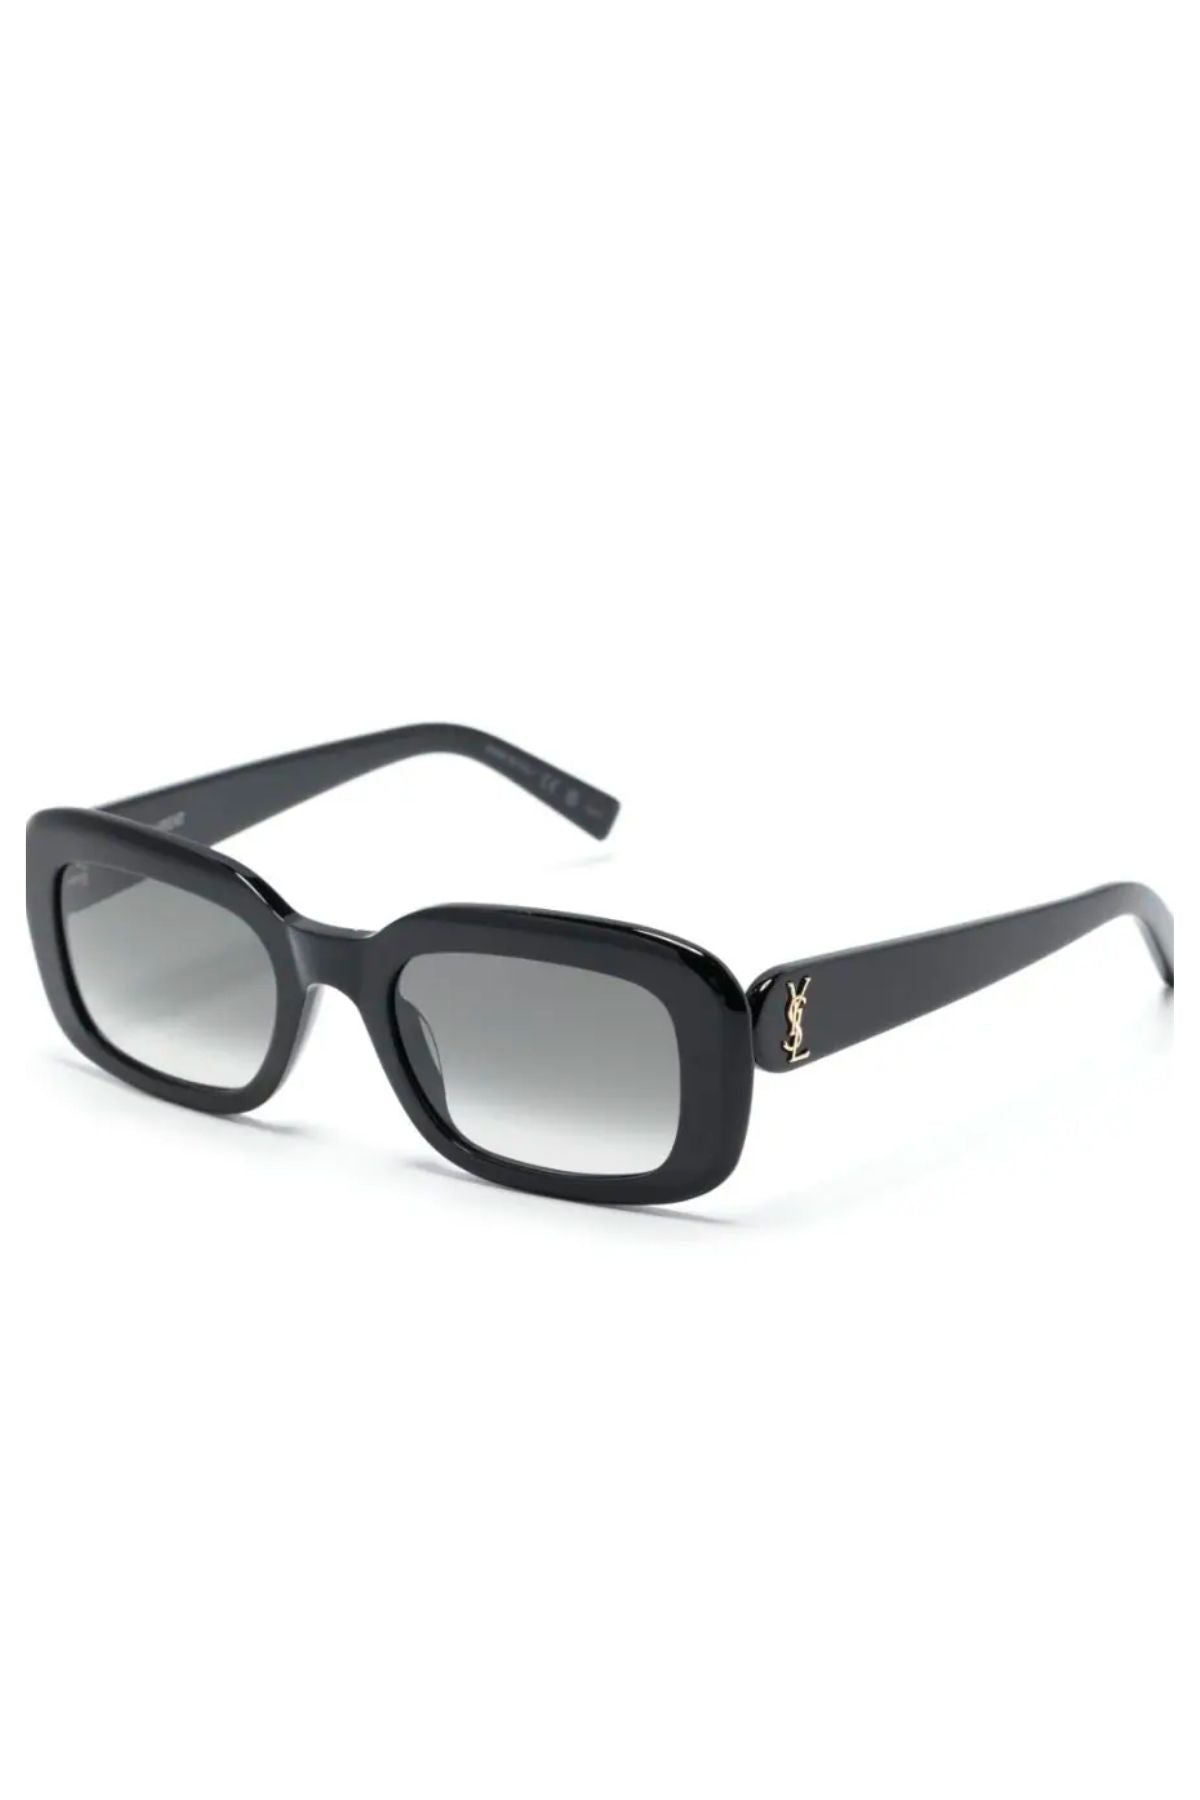 Saint Laurent Rectangle Frame Sunglasses - Black